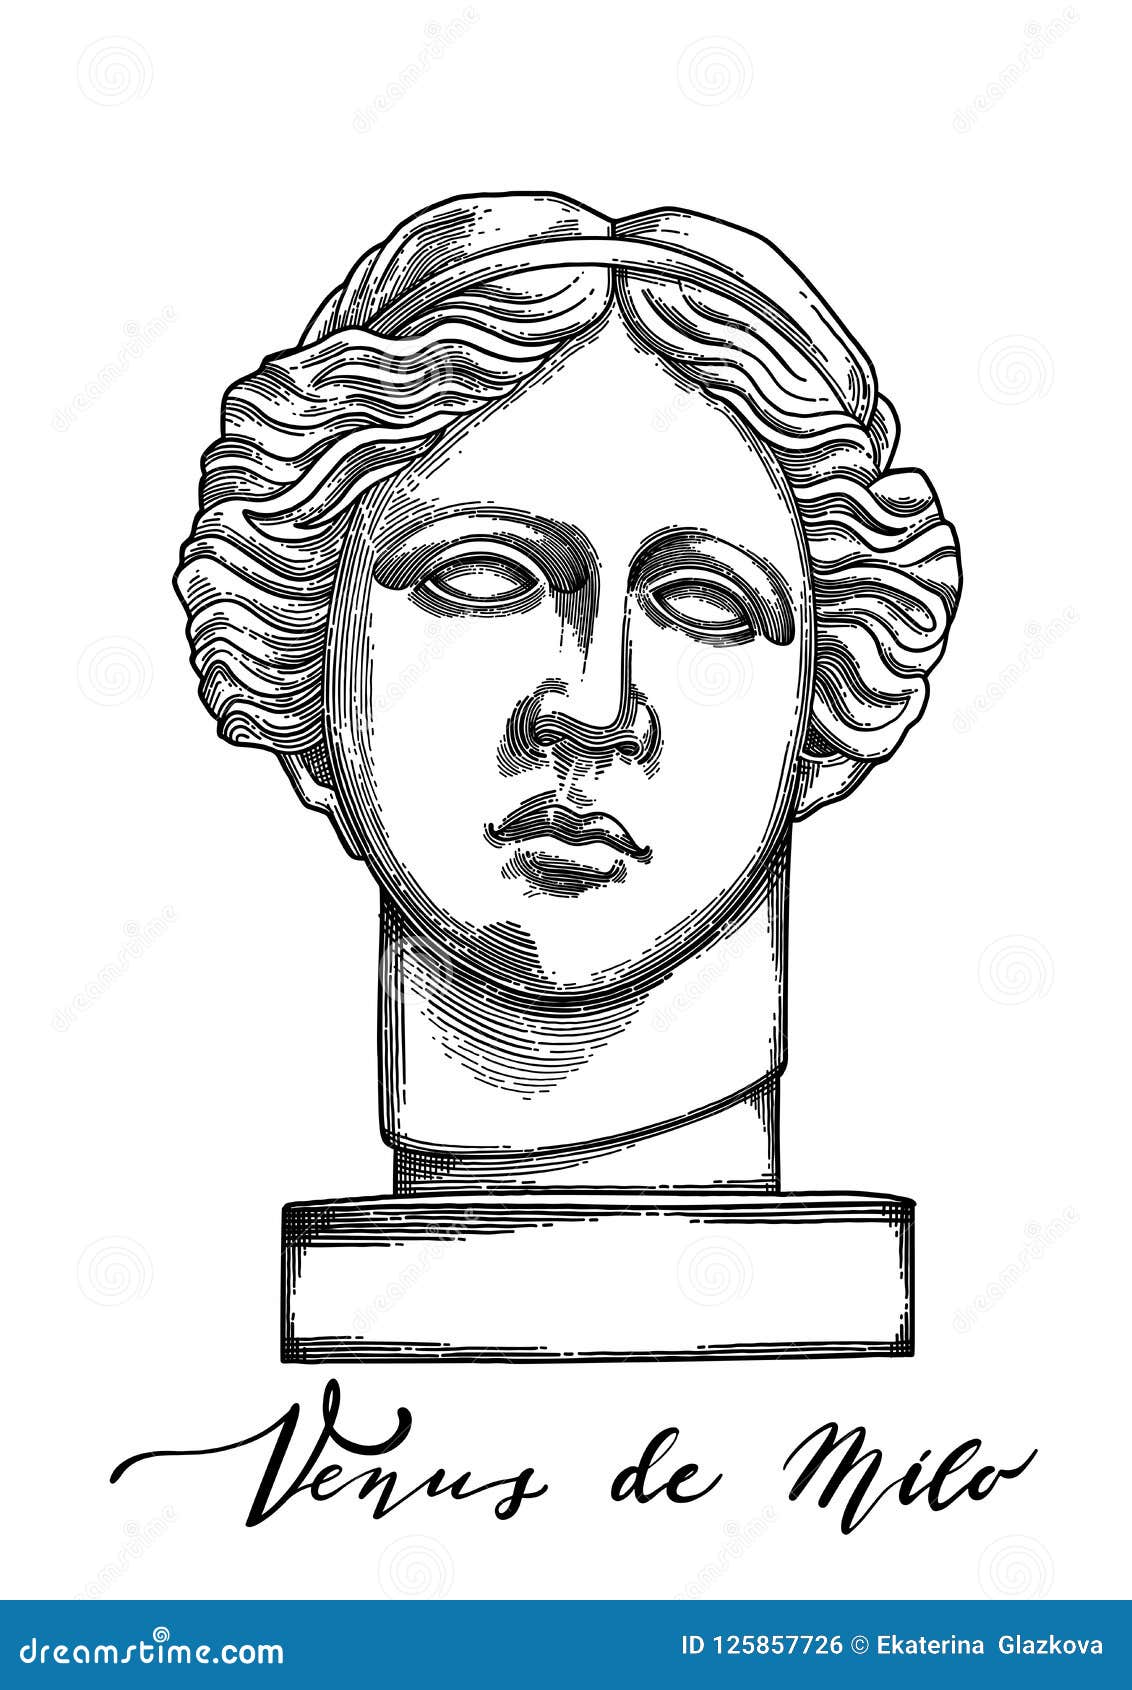 Venus de milo head sculpture drawn in engraving technique stock vector